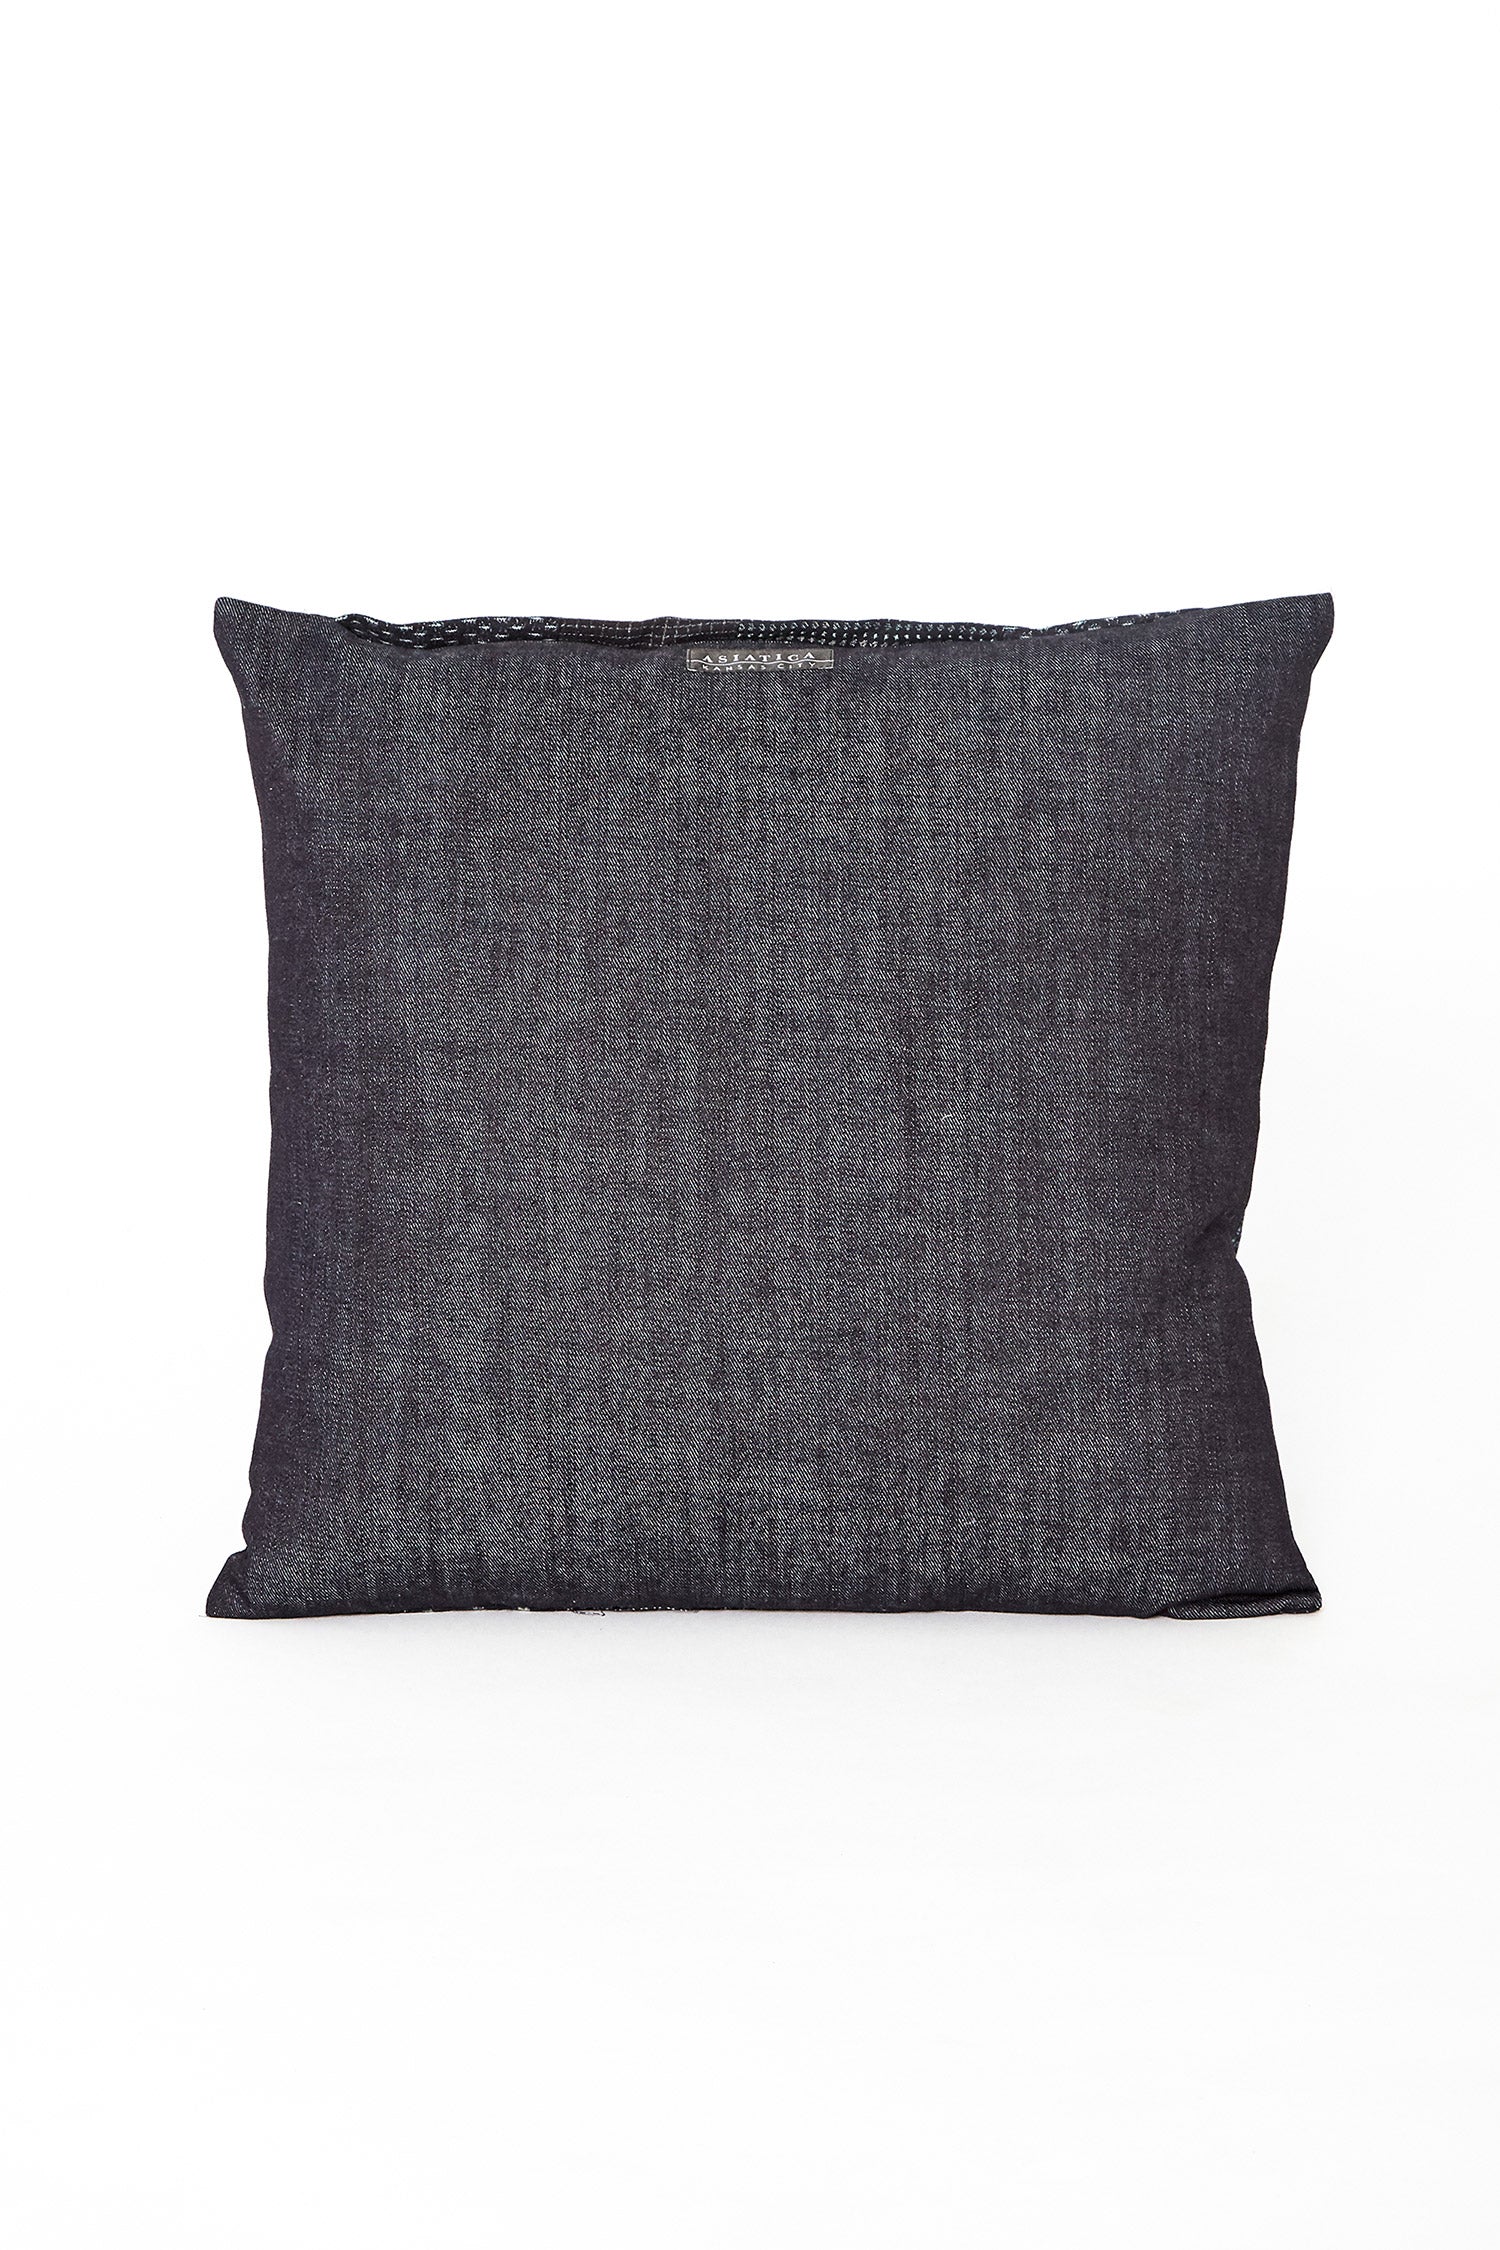 Patchwork Pillow in Vintage Japanese Indigo Cotton Ikats No. 6